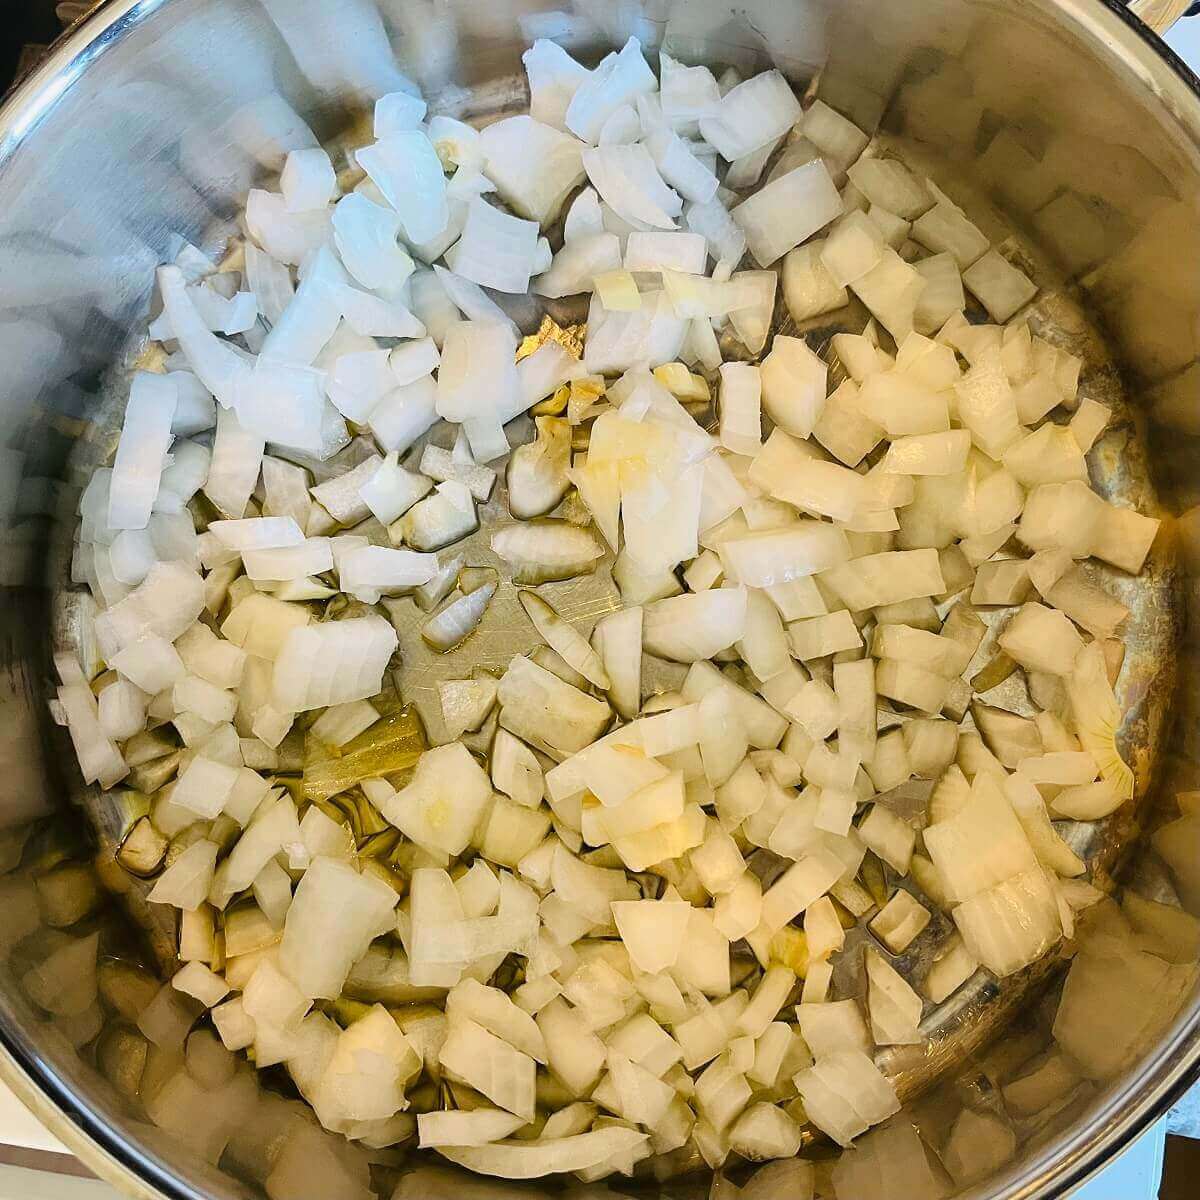 Raw chopped onions in a metal pan.